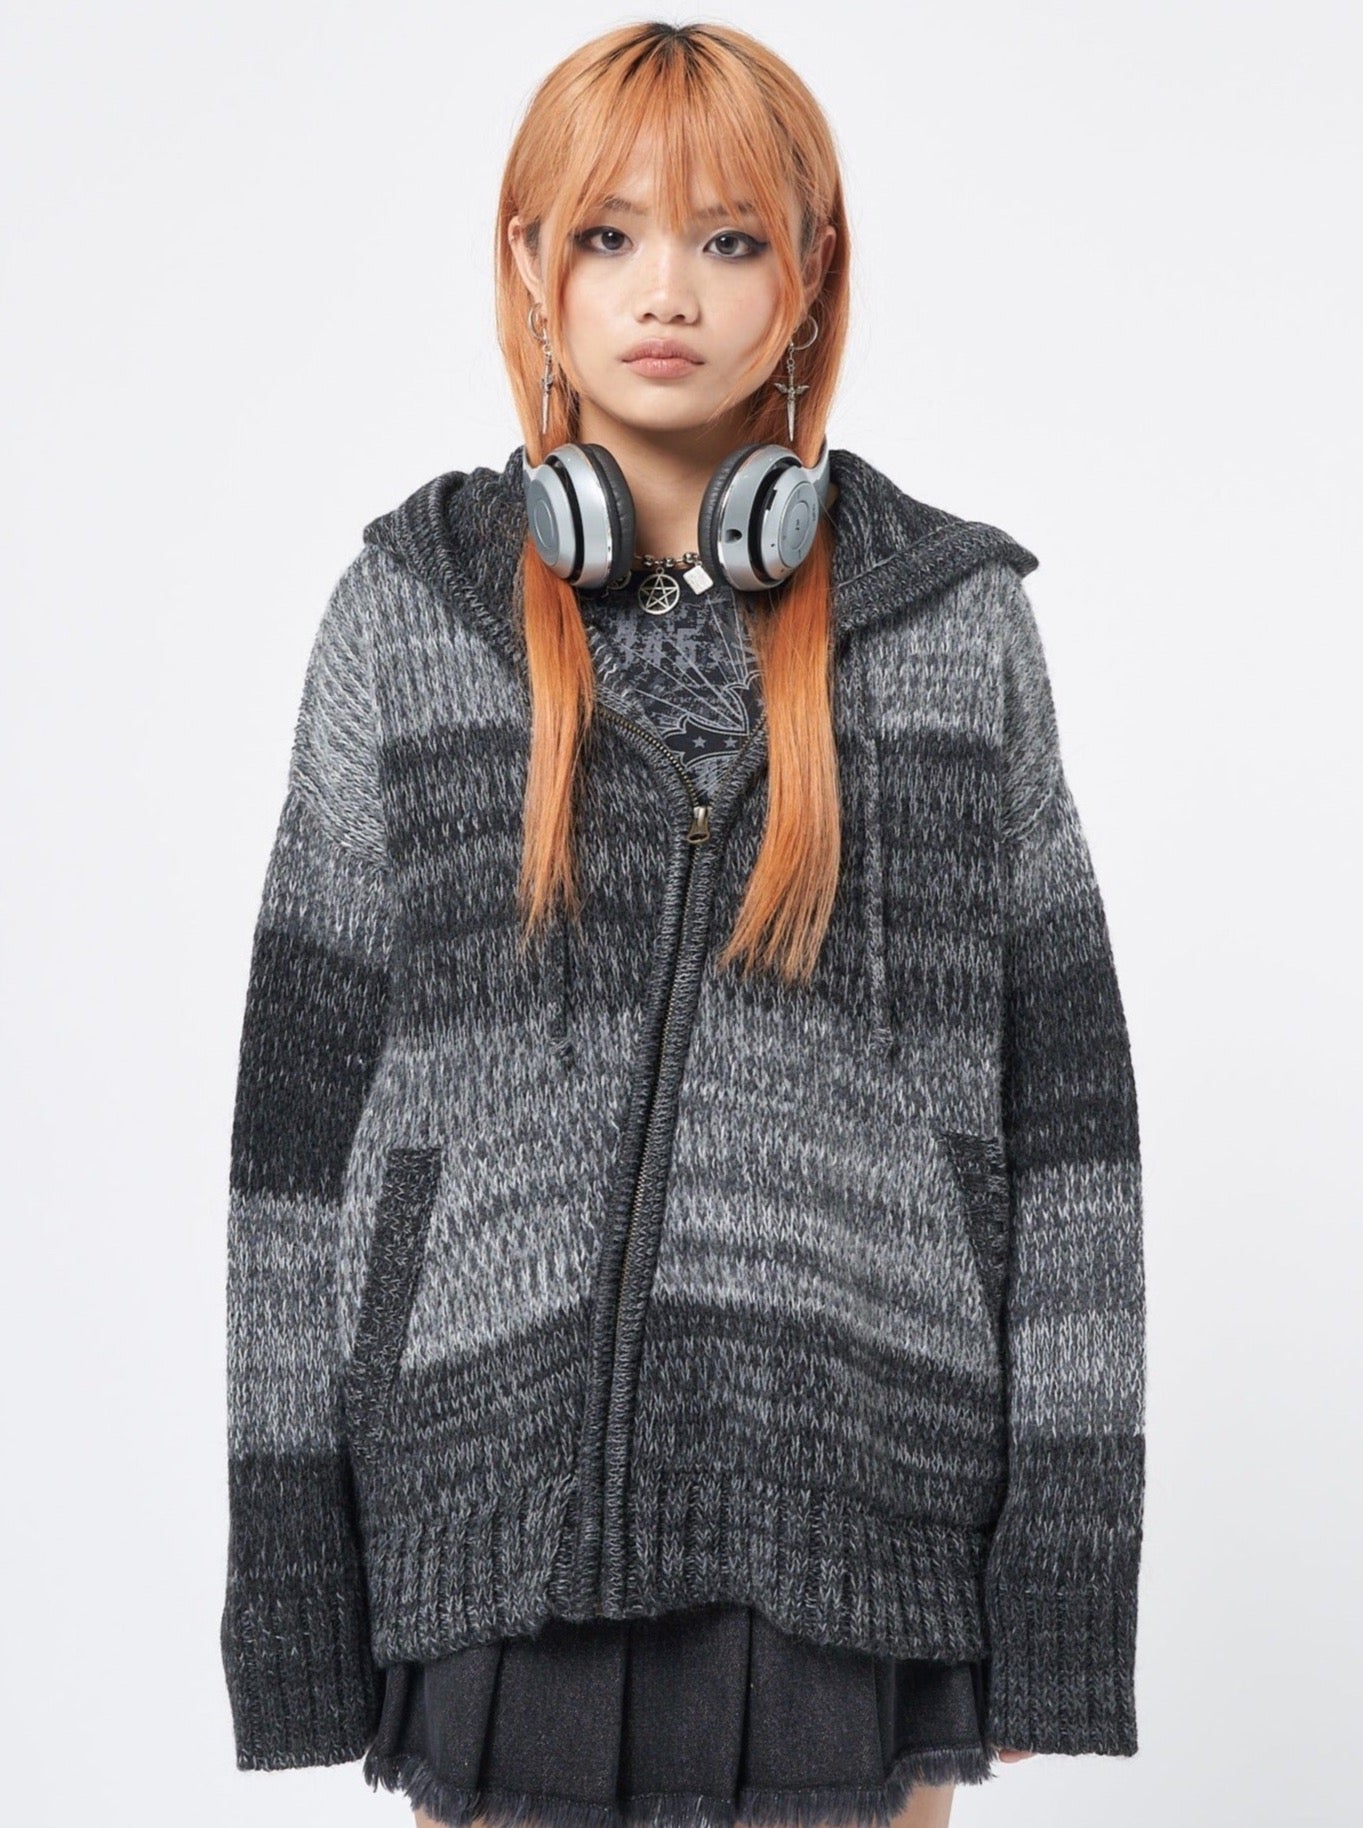 Asymmetric zip up hood knit cardigan in black and grey